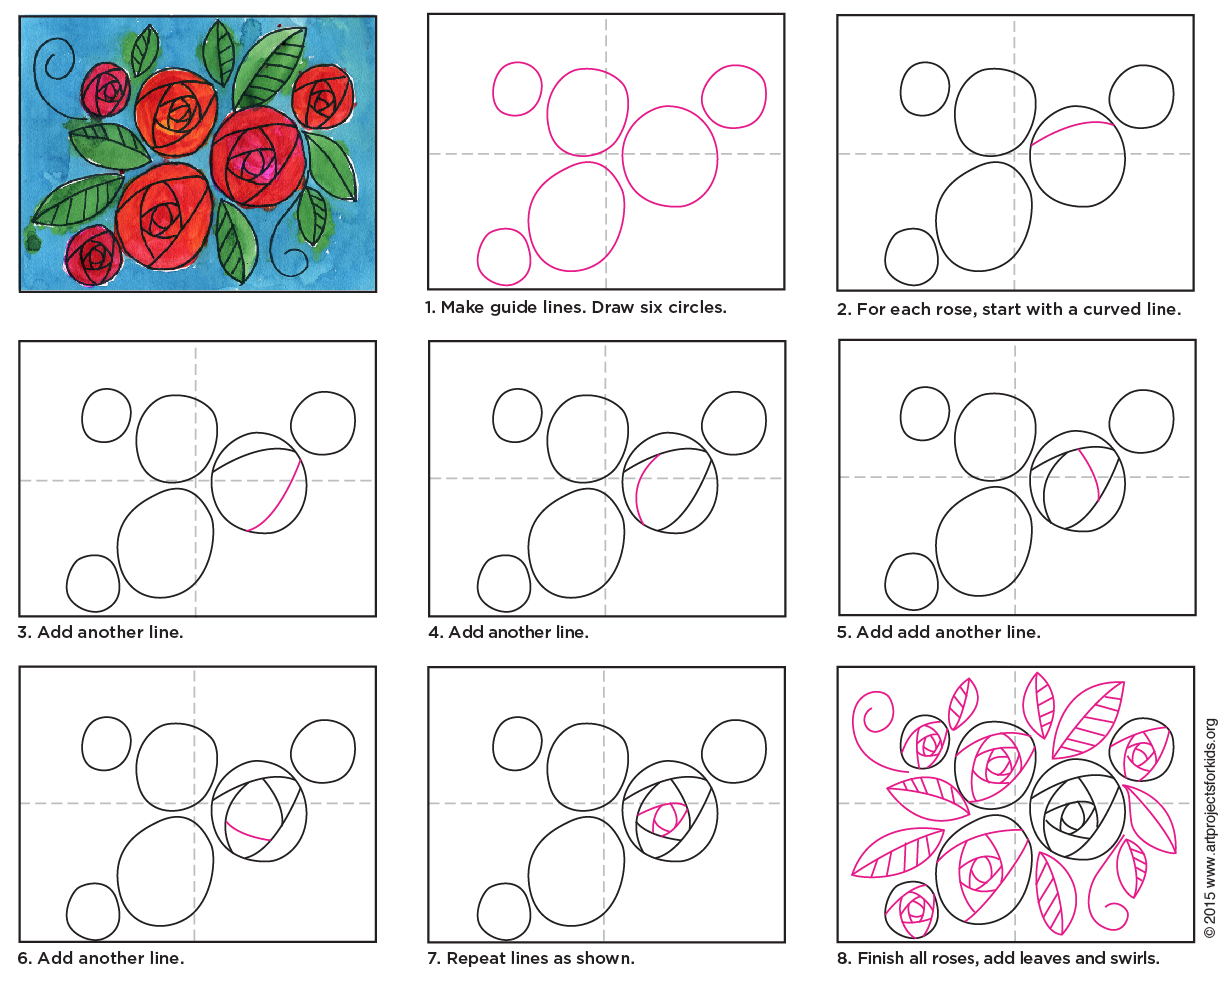 cricle-roses-diagram.jpg